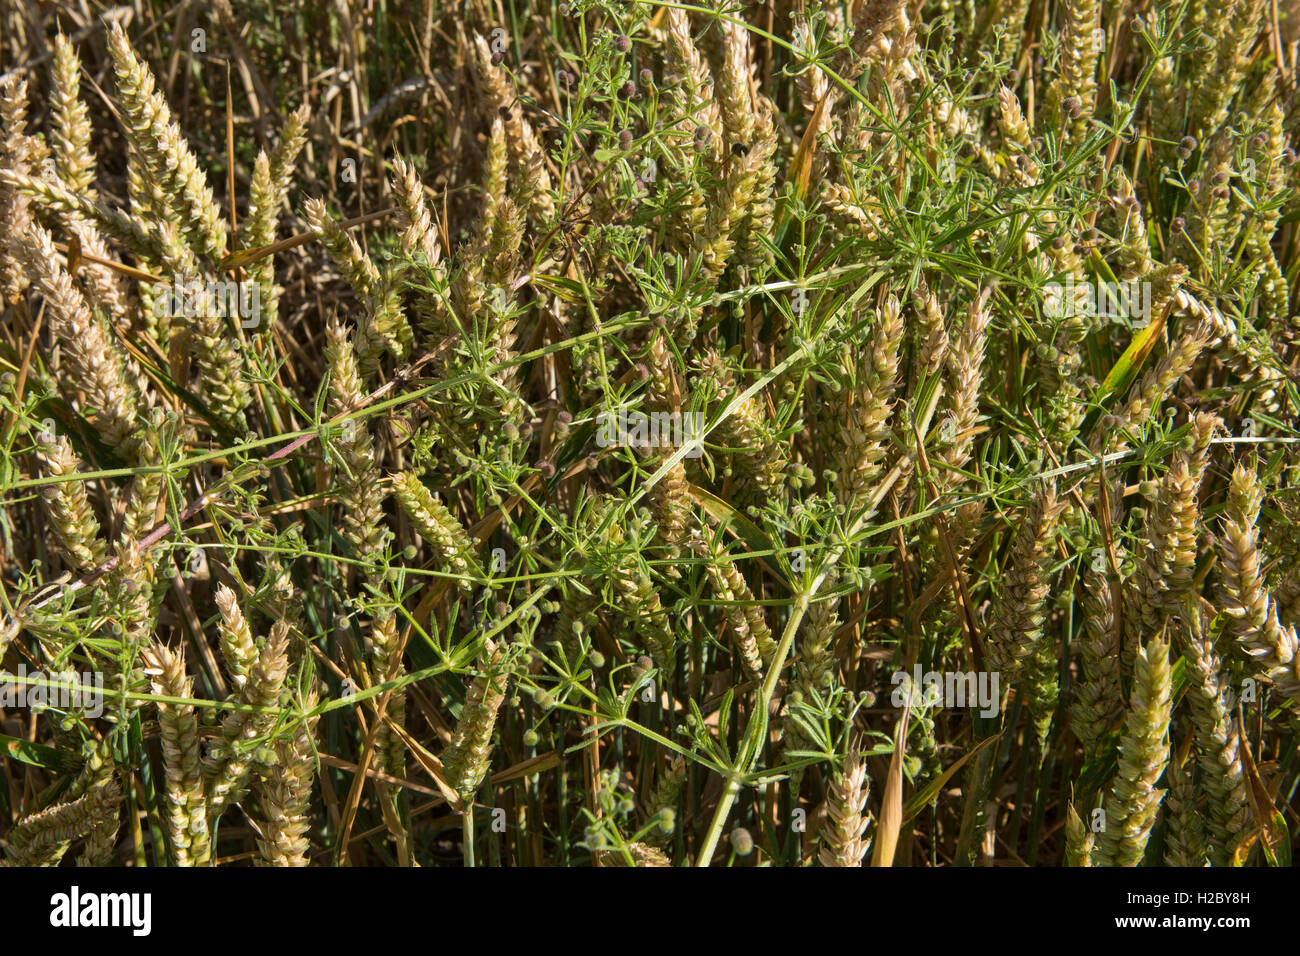 Cleavers, Galium aparine, growing through a ripe wheatr crop before harvest, Berkshire, July Stock Photo